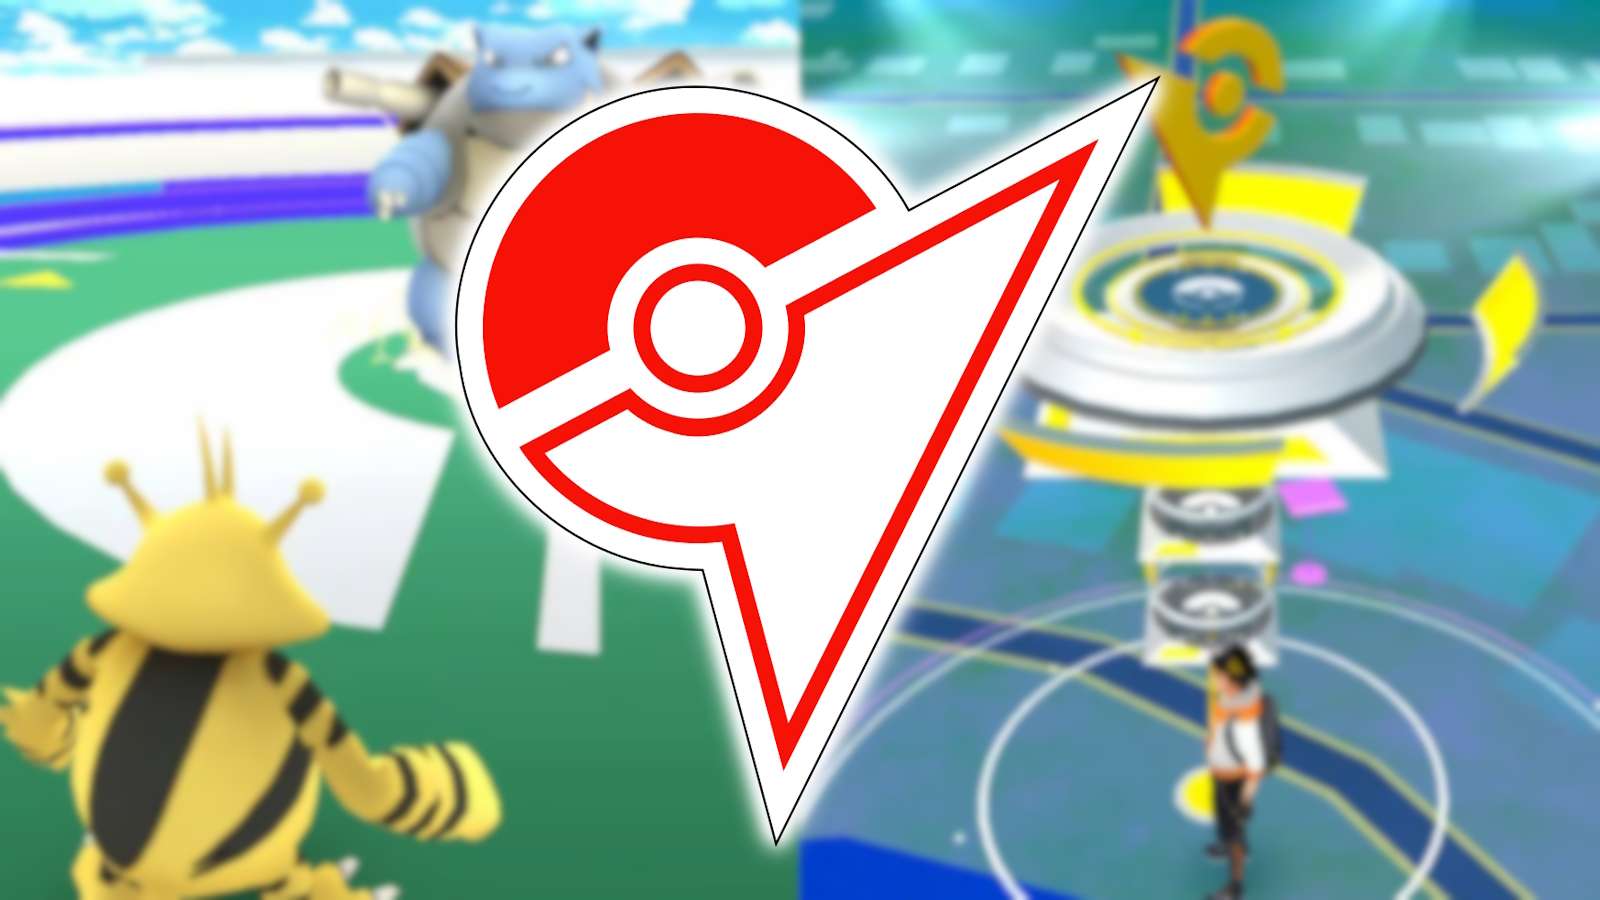 Pokemon Go gym symbol with gym battles in background.